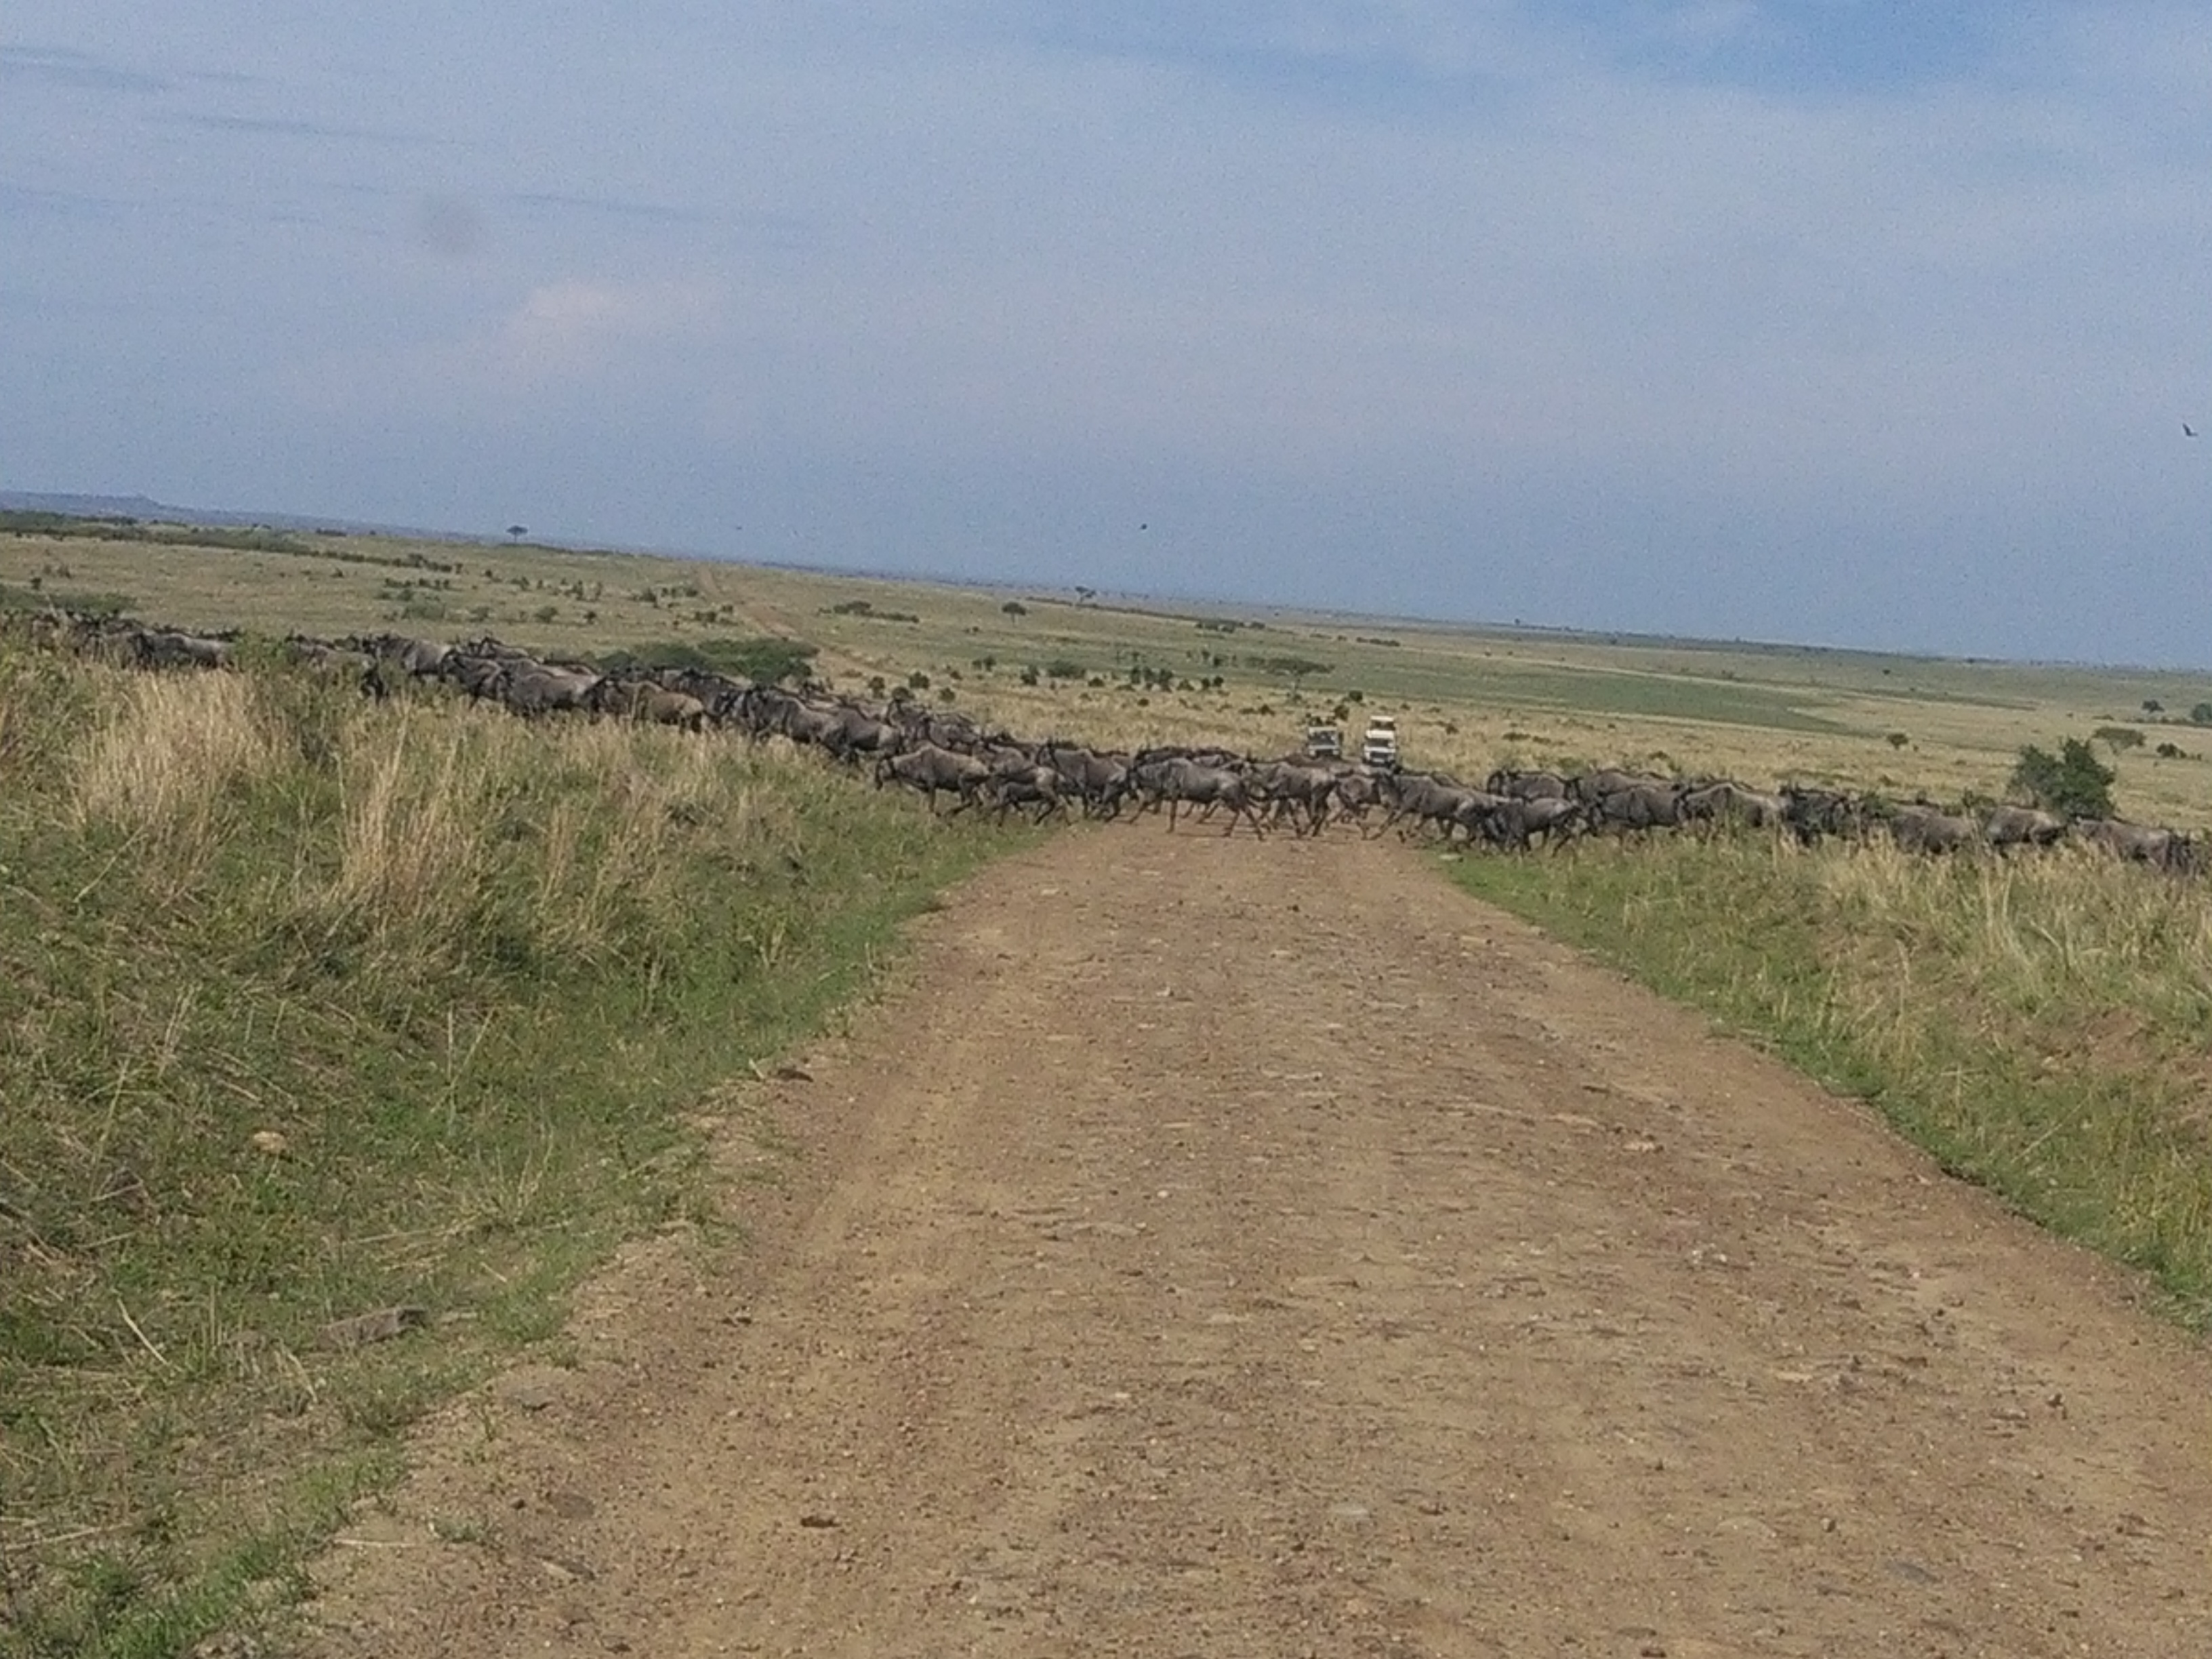 The great wildebeest migration in Masai Mara Safari.